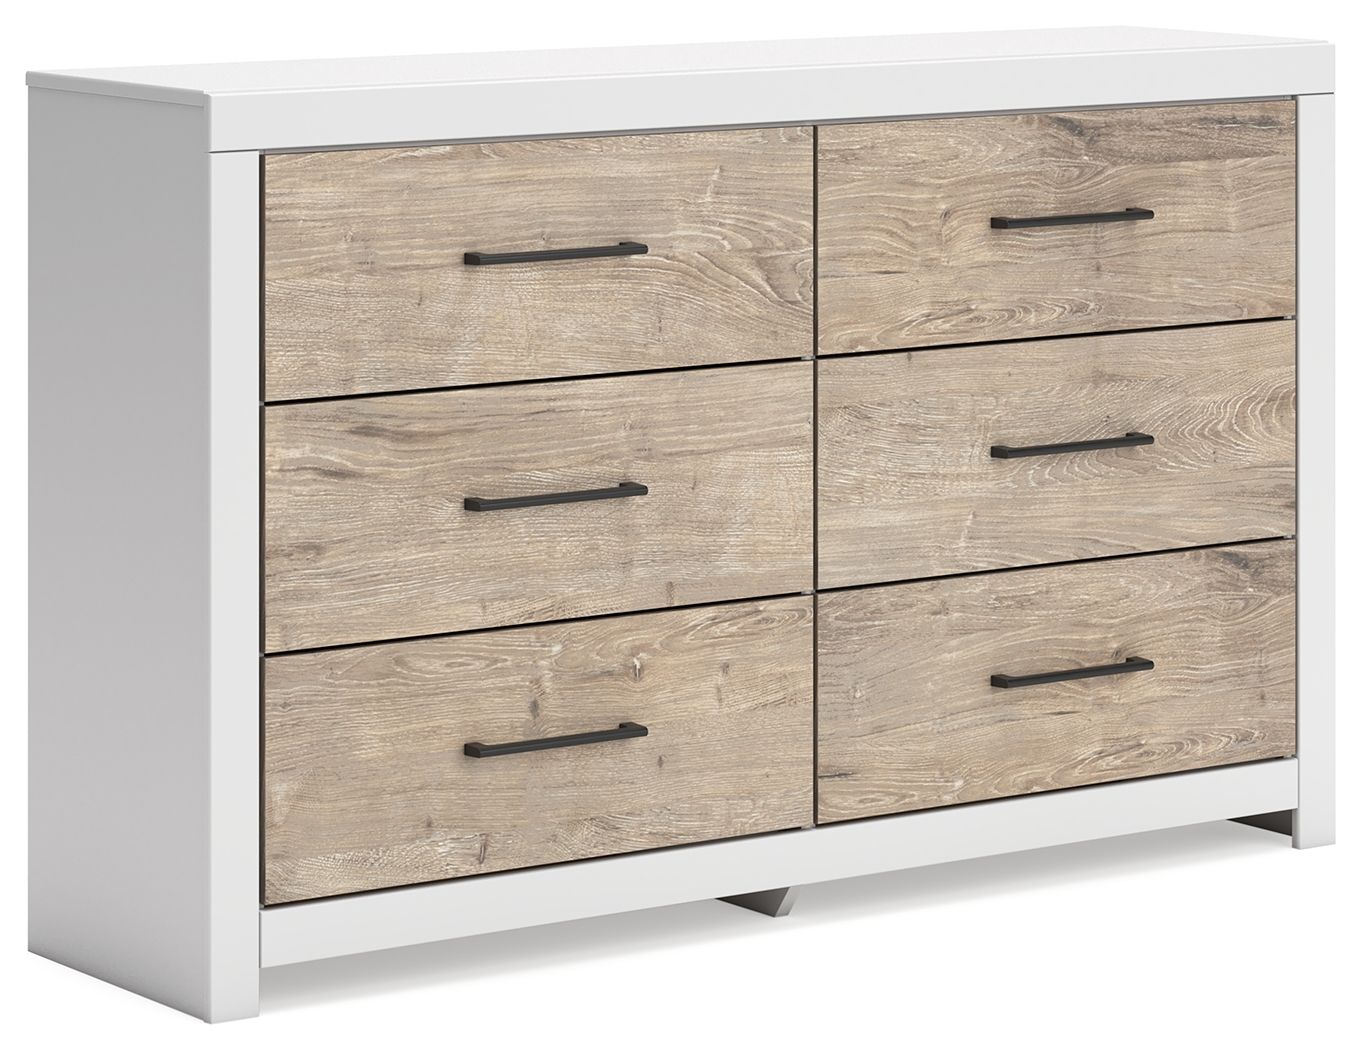 Charbitt - Two-tone - 5 Pc. - Dresser, Mirror, Chest, Full Panel Bed